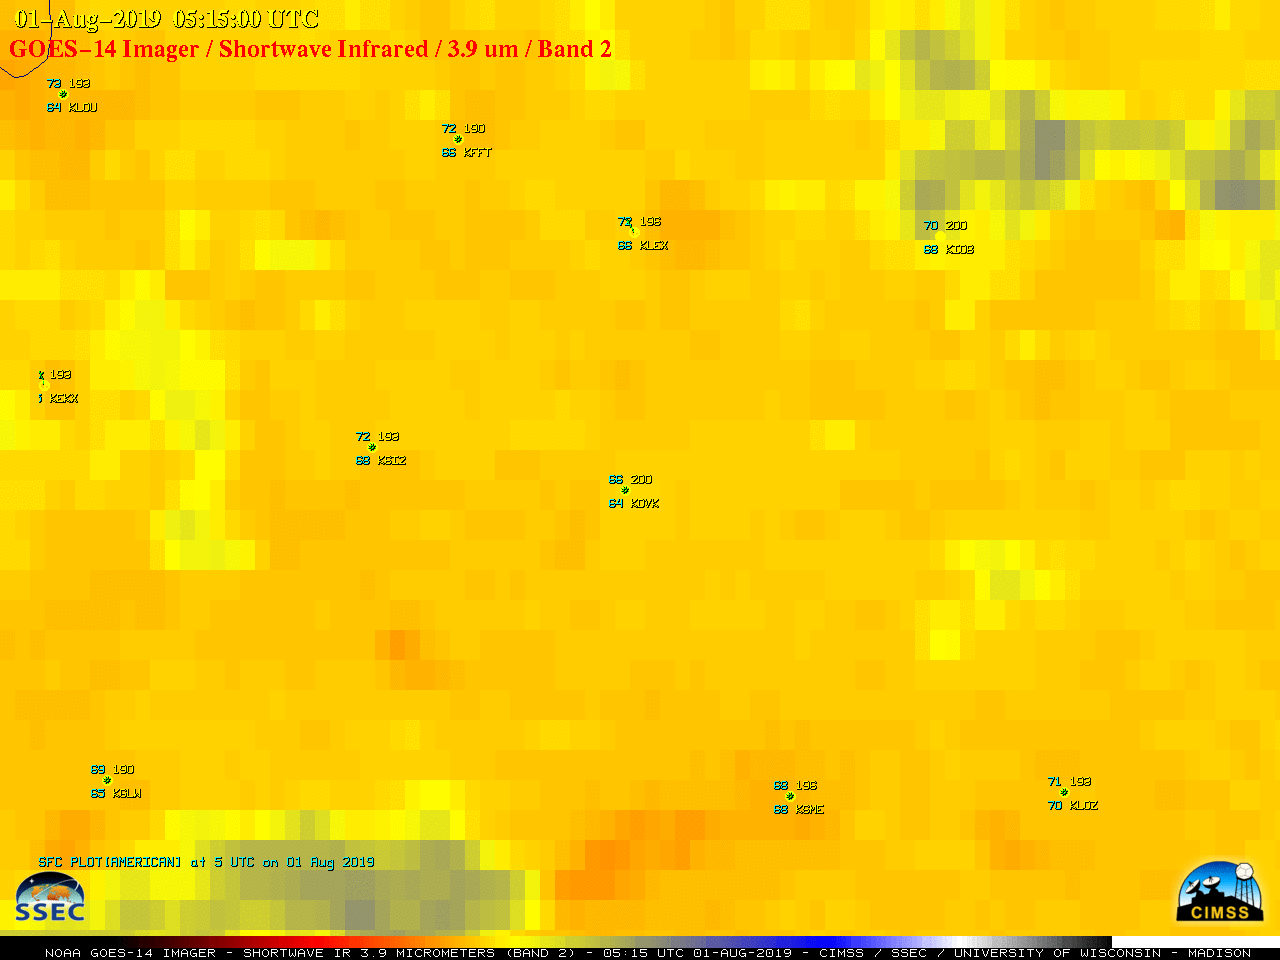 GOES-14 Shortwave Infrared (3.9 µm) images [click to enlarge]